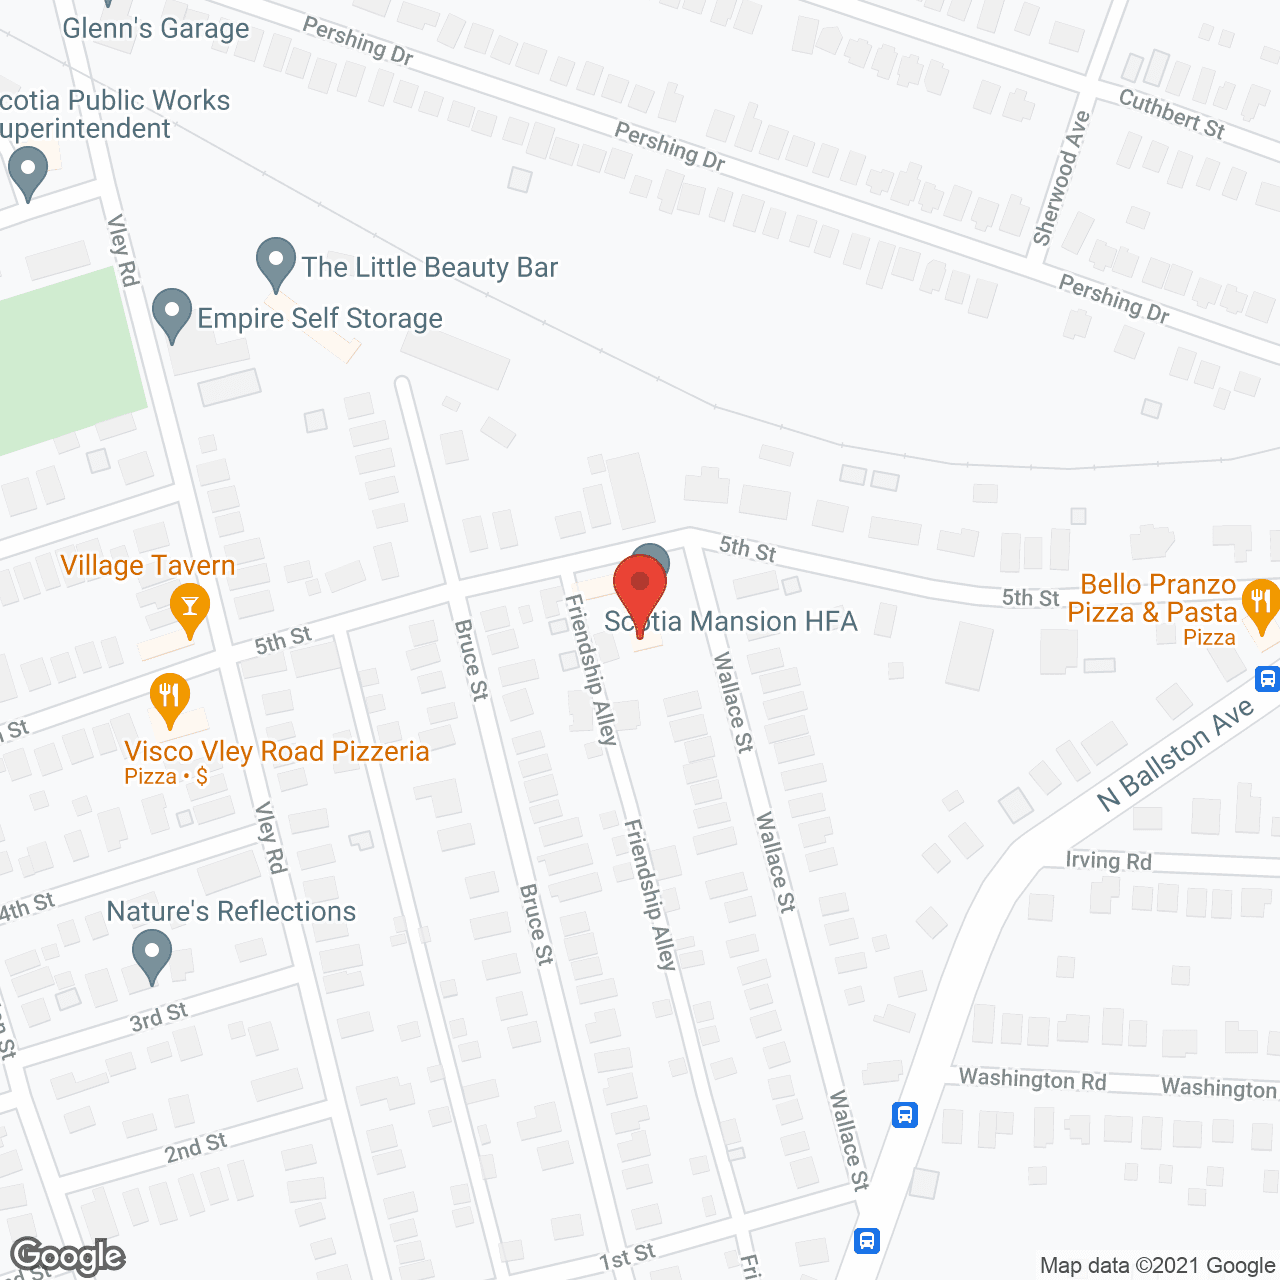 Scotia Mansion in google map